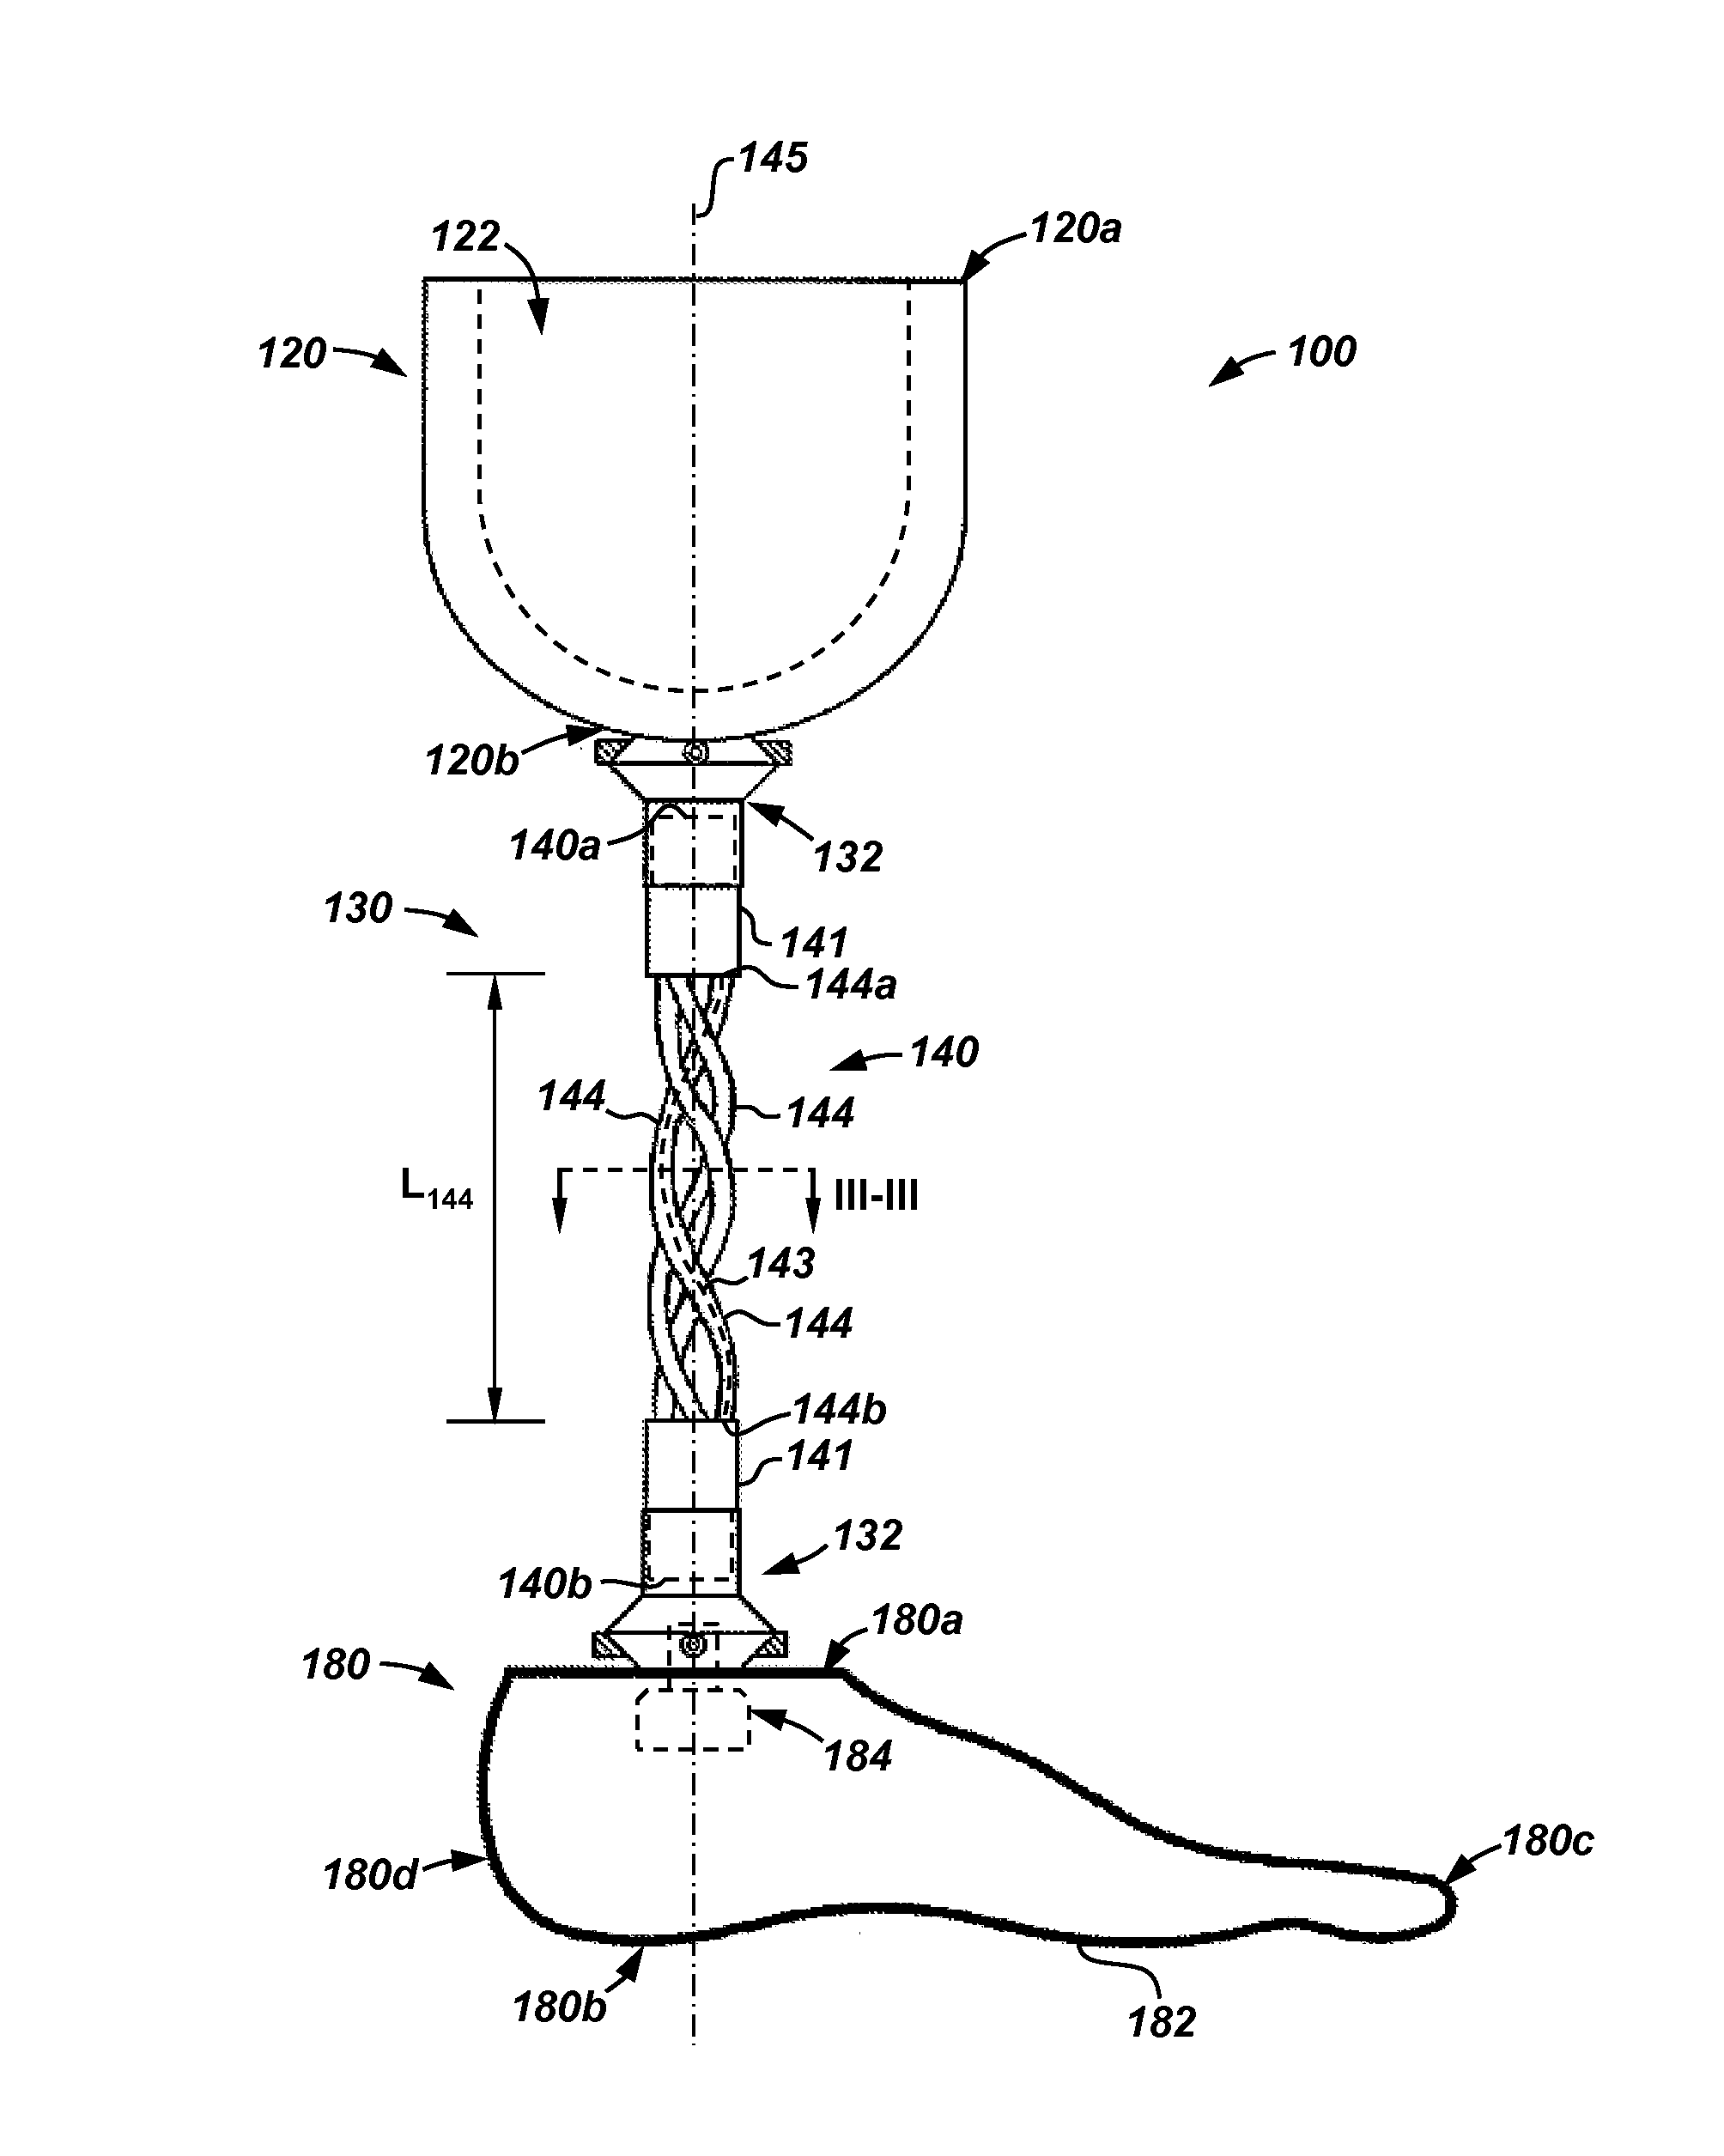 Composite pylon for a prosthetic device